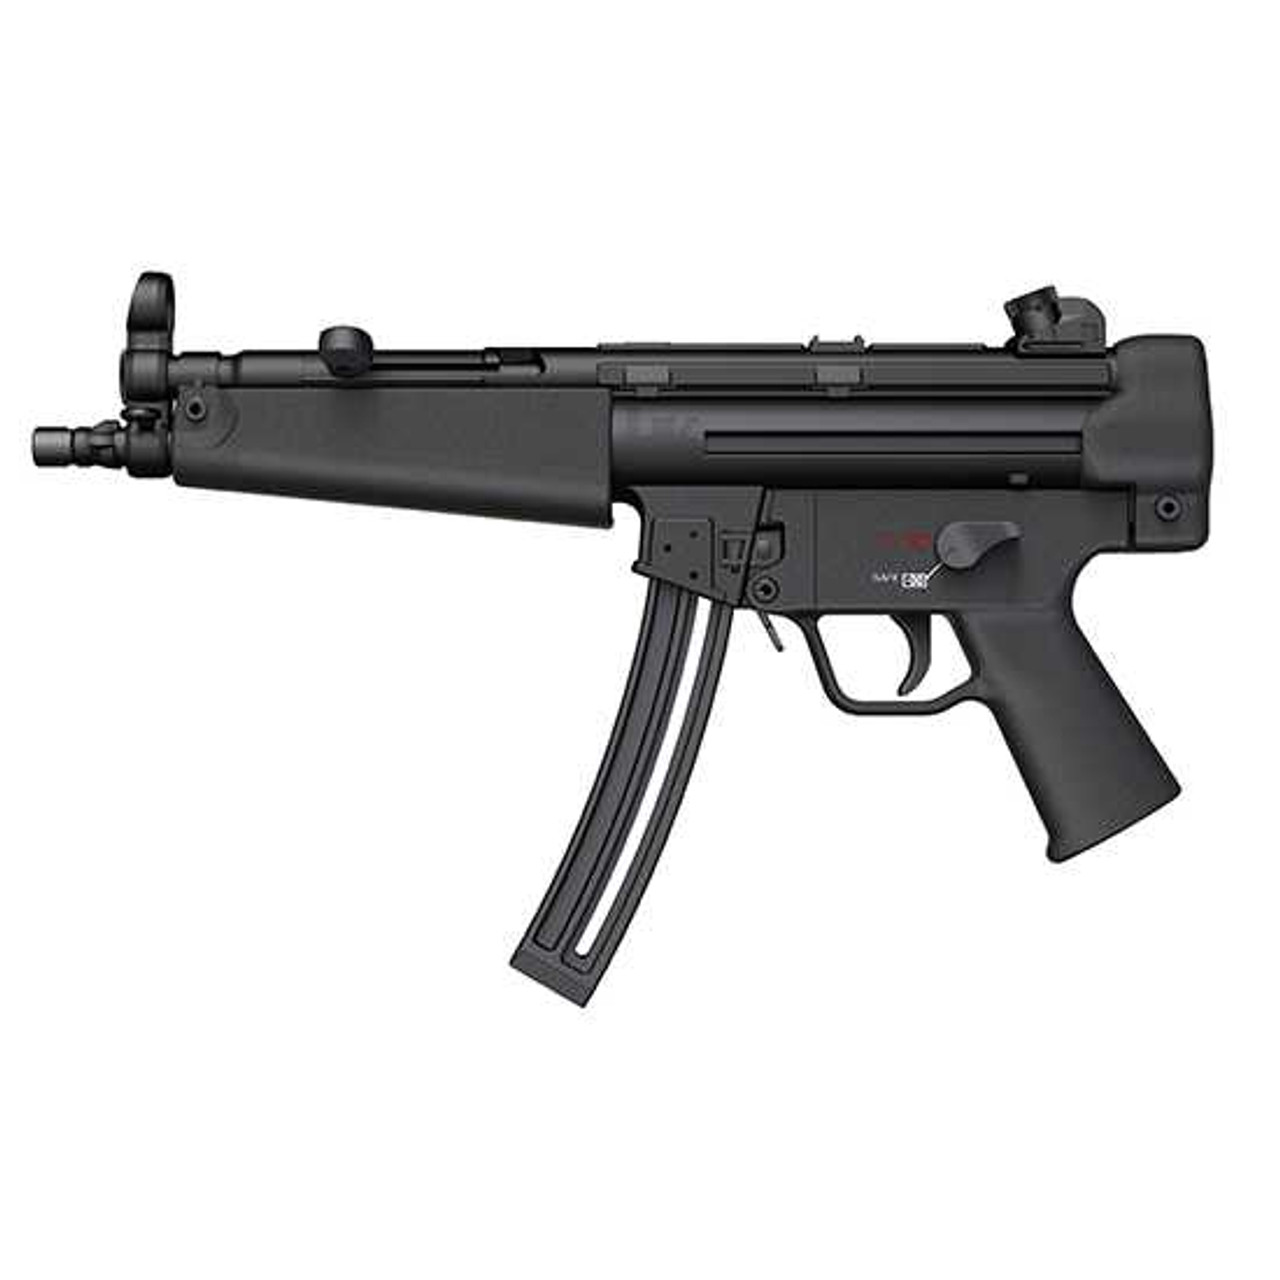 HK MP5 PISTOL 22LR 8.5 1 25RD